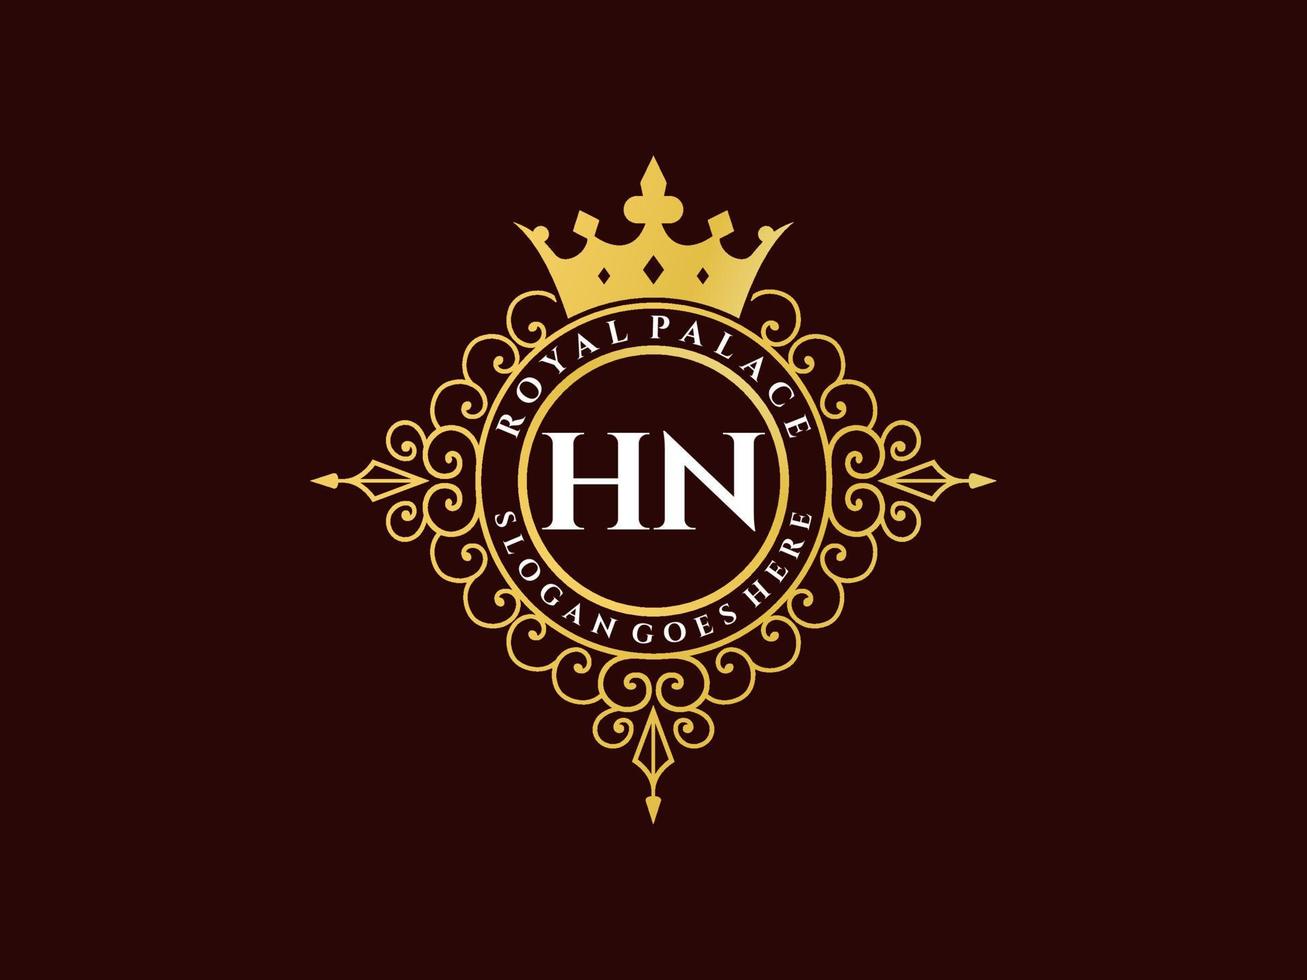 letra hn antigo logotipo vitoriano de luxo real com moldura ornamental. vetor